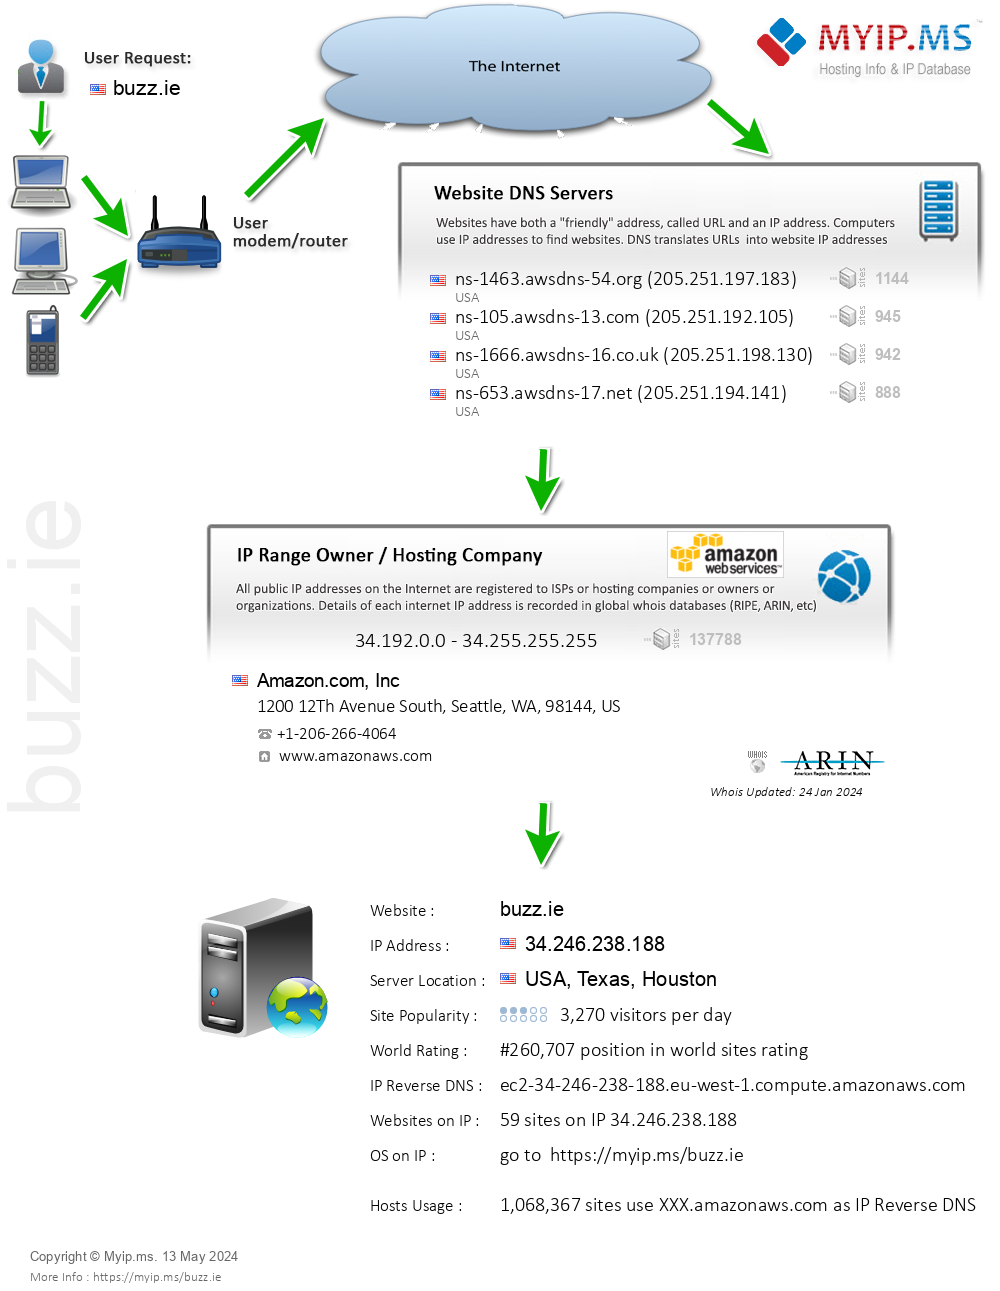 Buzz.ie - Website Hosting Visual IP Diagram